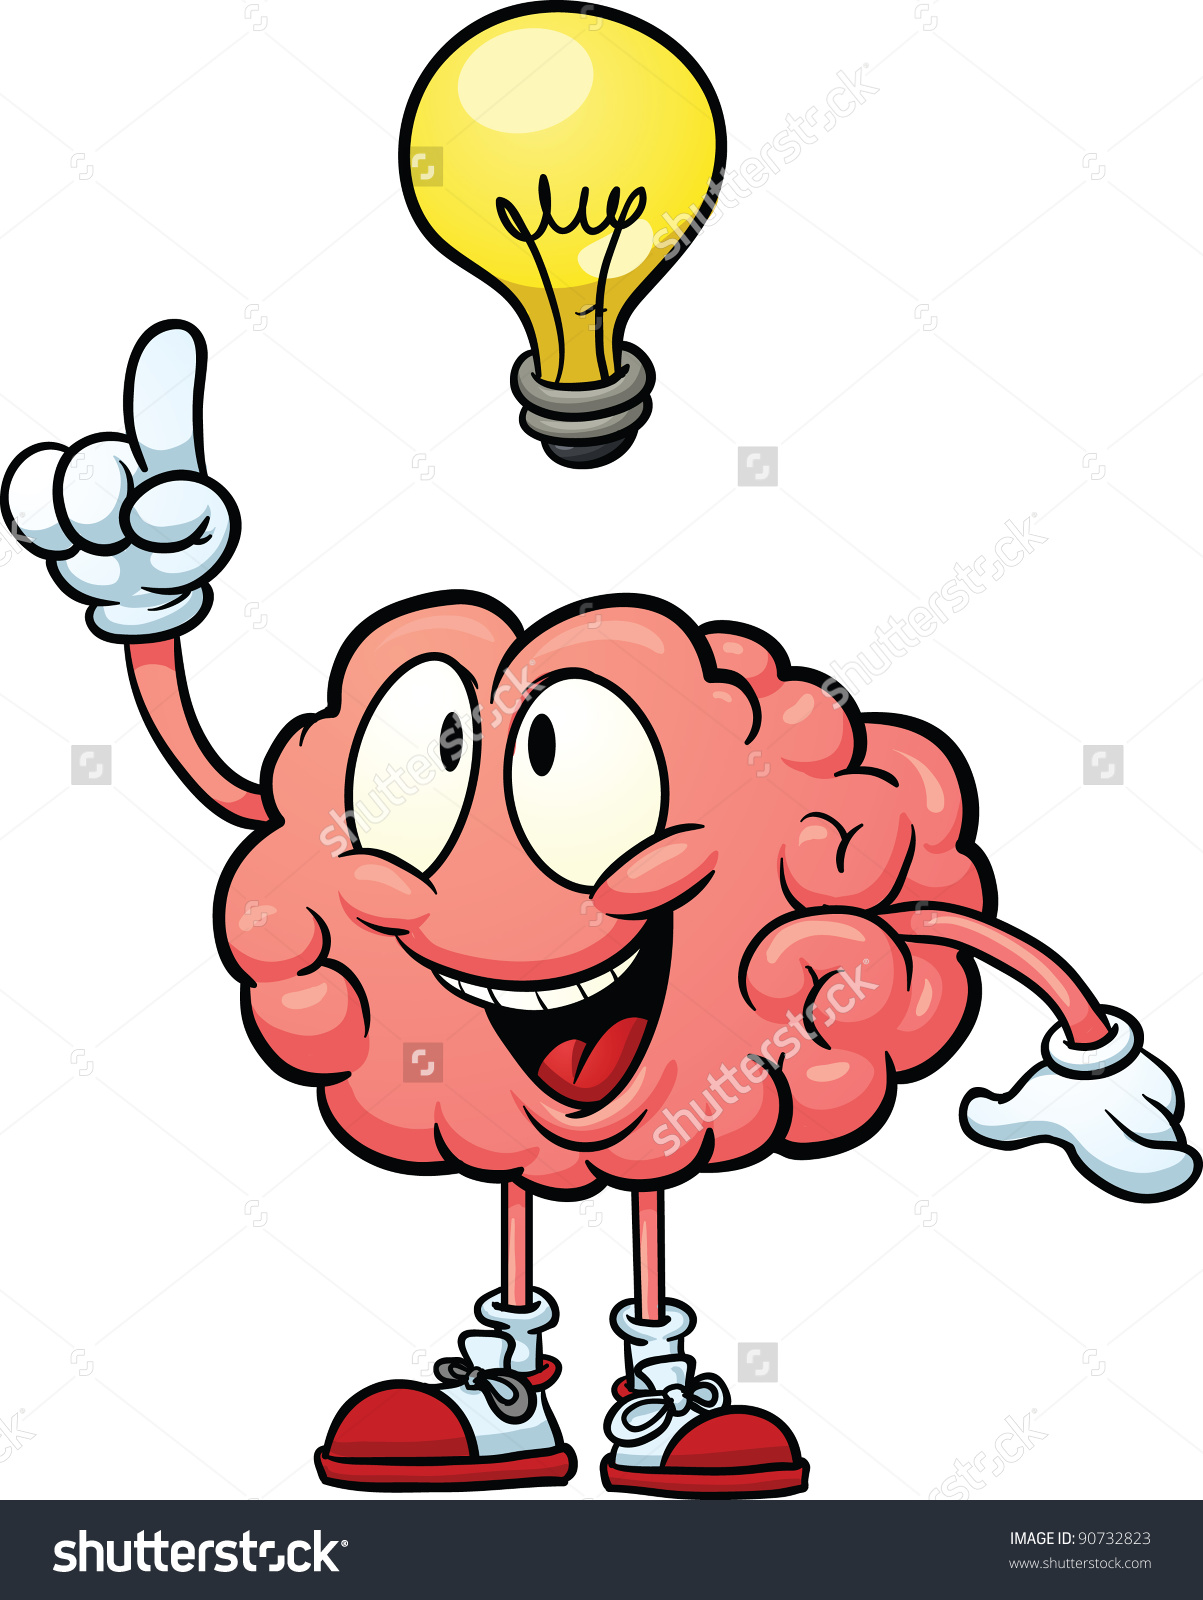 Free Mind Clipart smart brain, Download Free Clip Art on